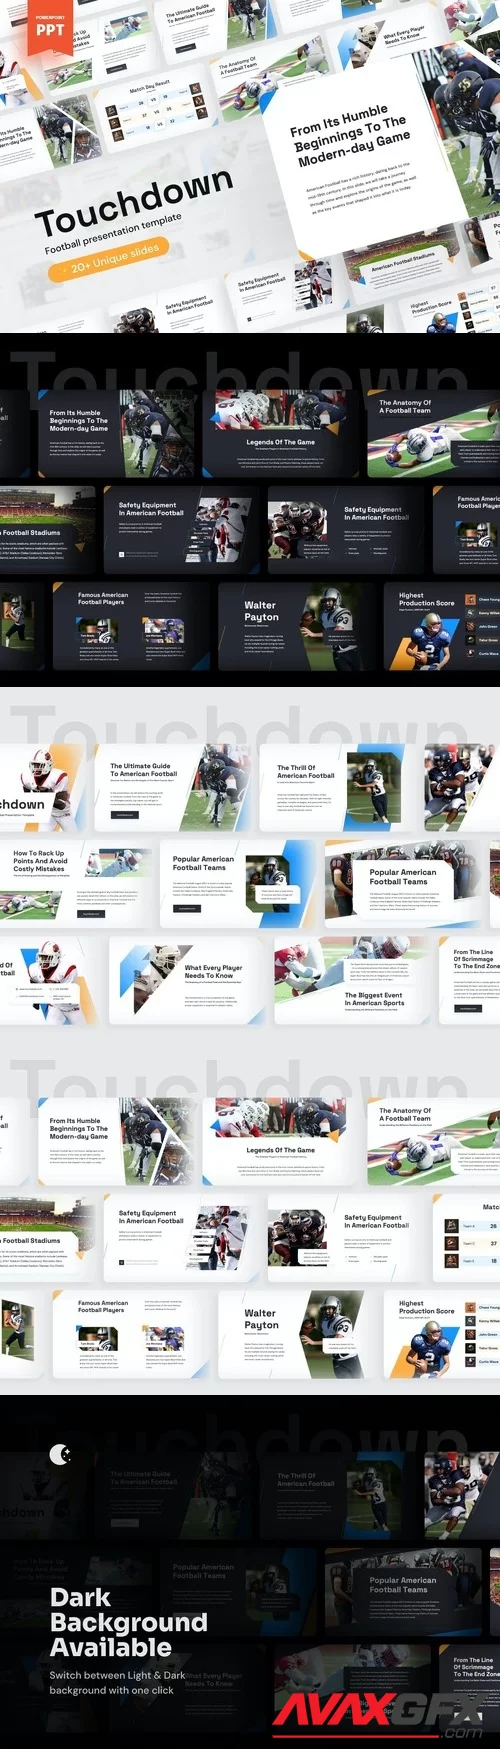 Touchdown - Football PowerPoint, Keynote and Google Slides Presentation [PPTX]